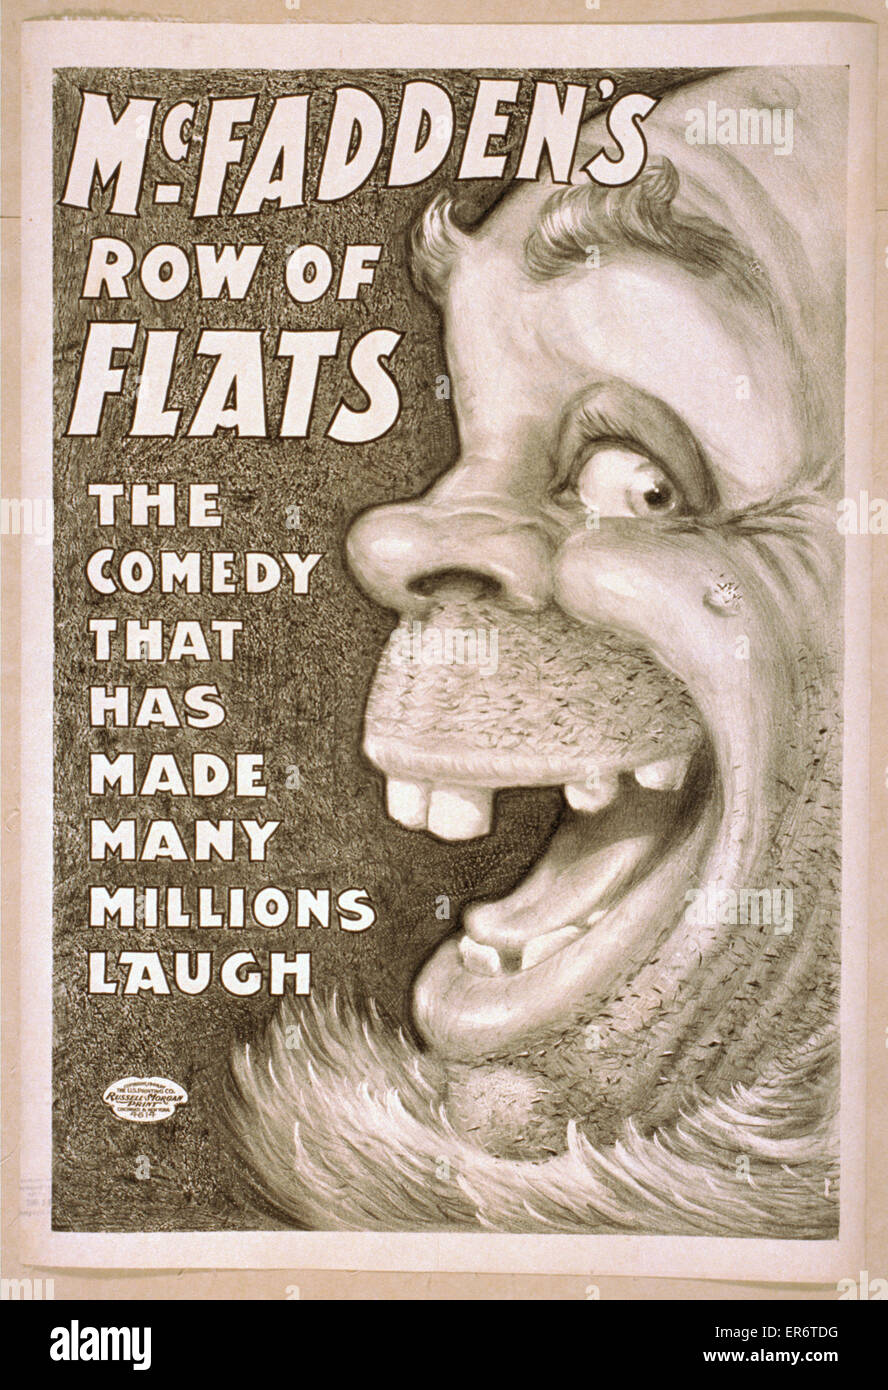 McFadden's row of flats the comedy that has made many millio Stock Photo